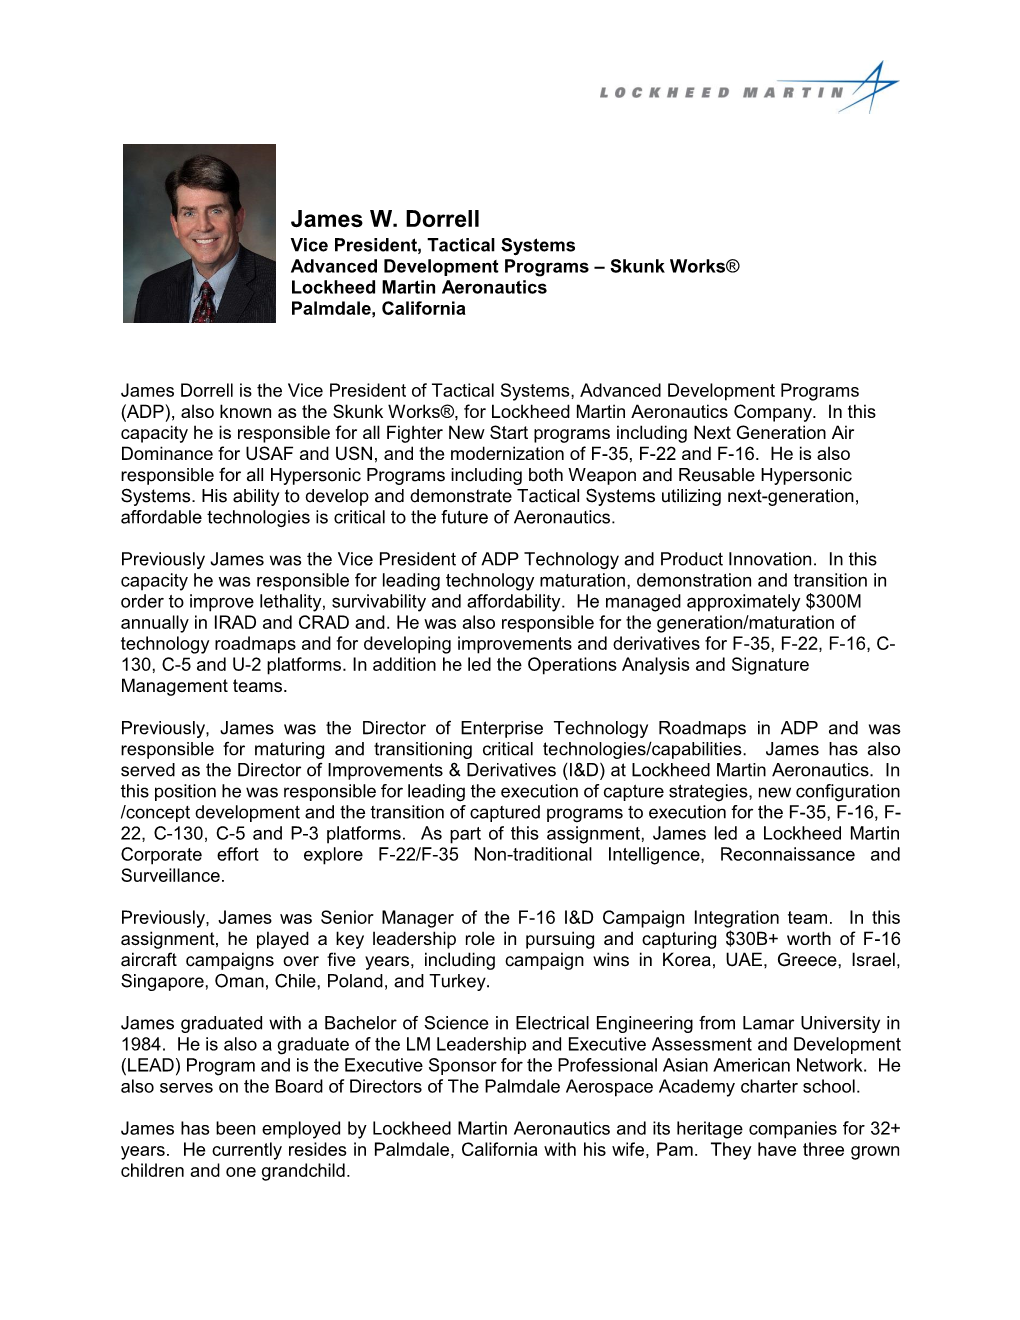 James W. Dorrell Vice President, Tactical Systems Advanced Development Programs – Skunk Works® Lockheed Martin Aeronautics Palmdale, California